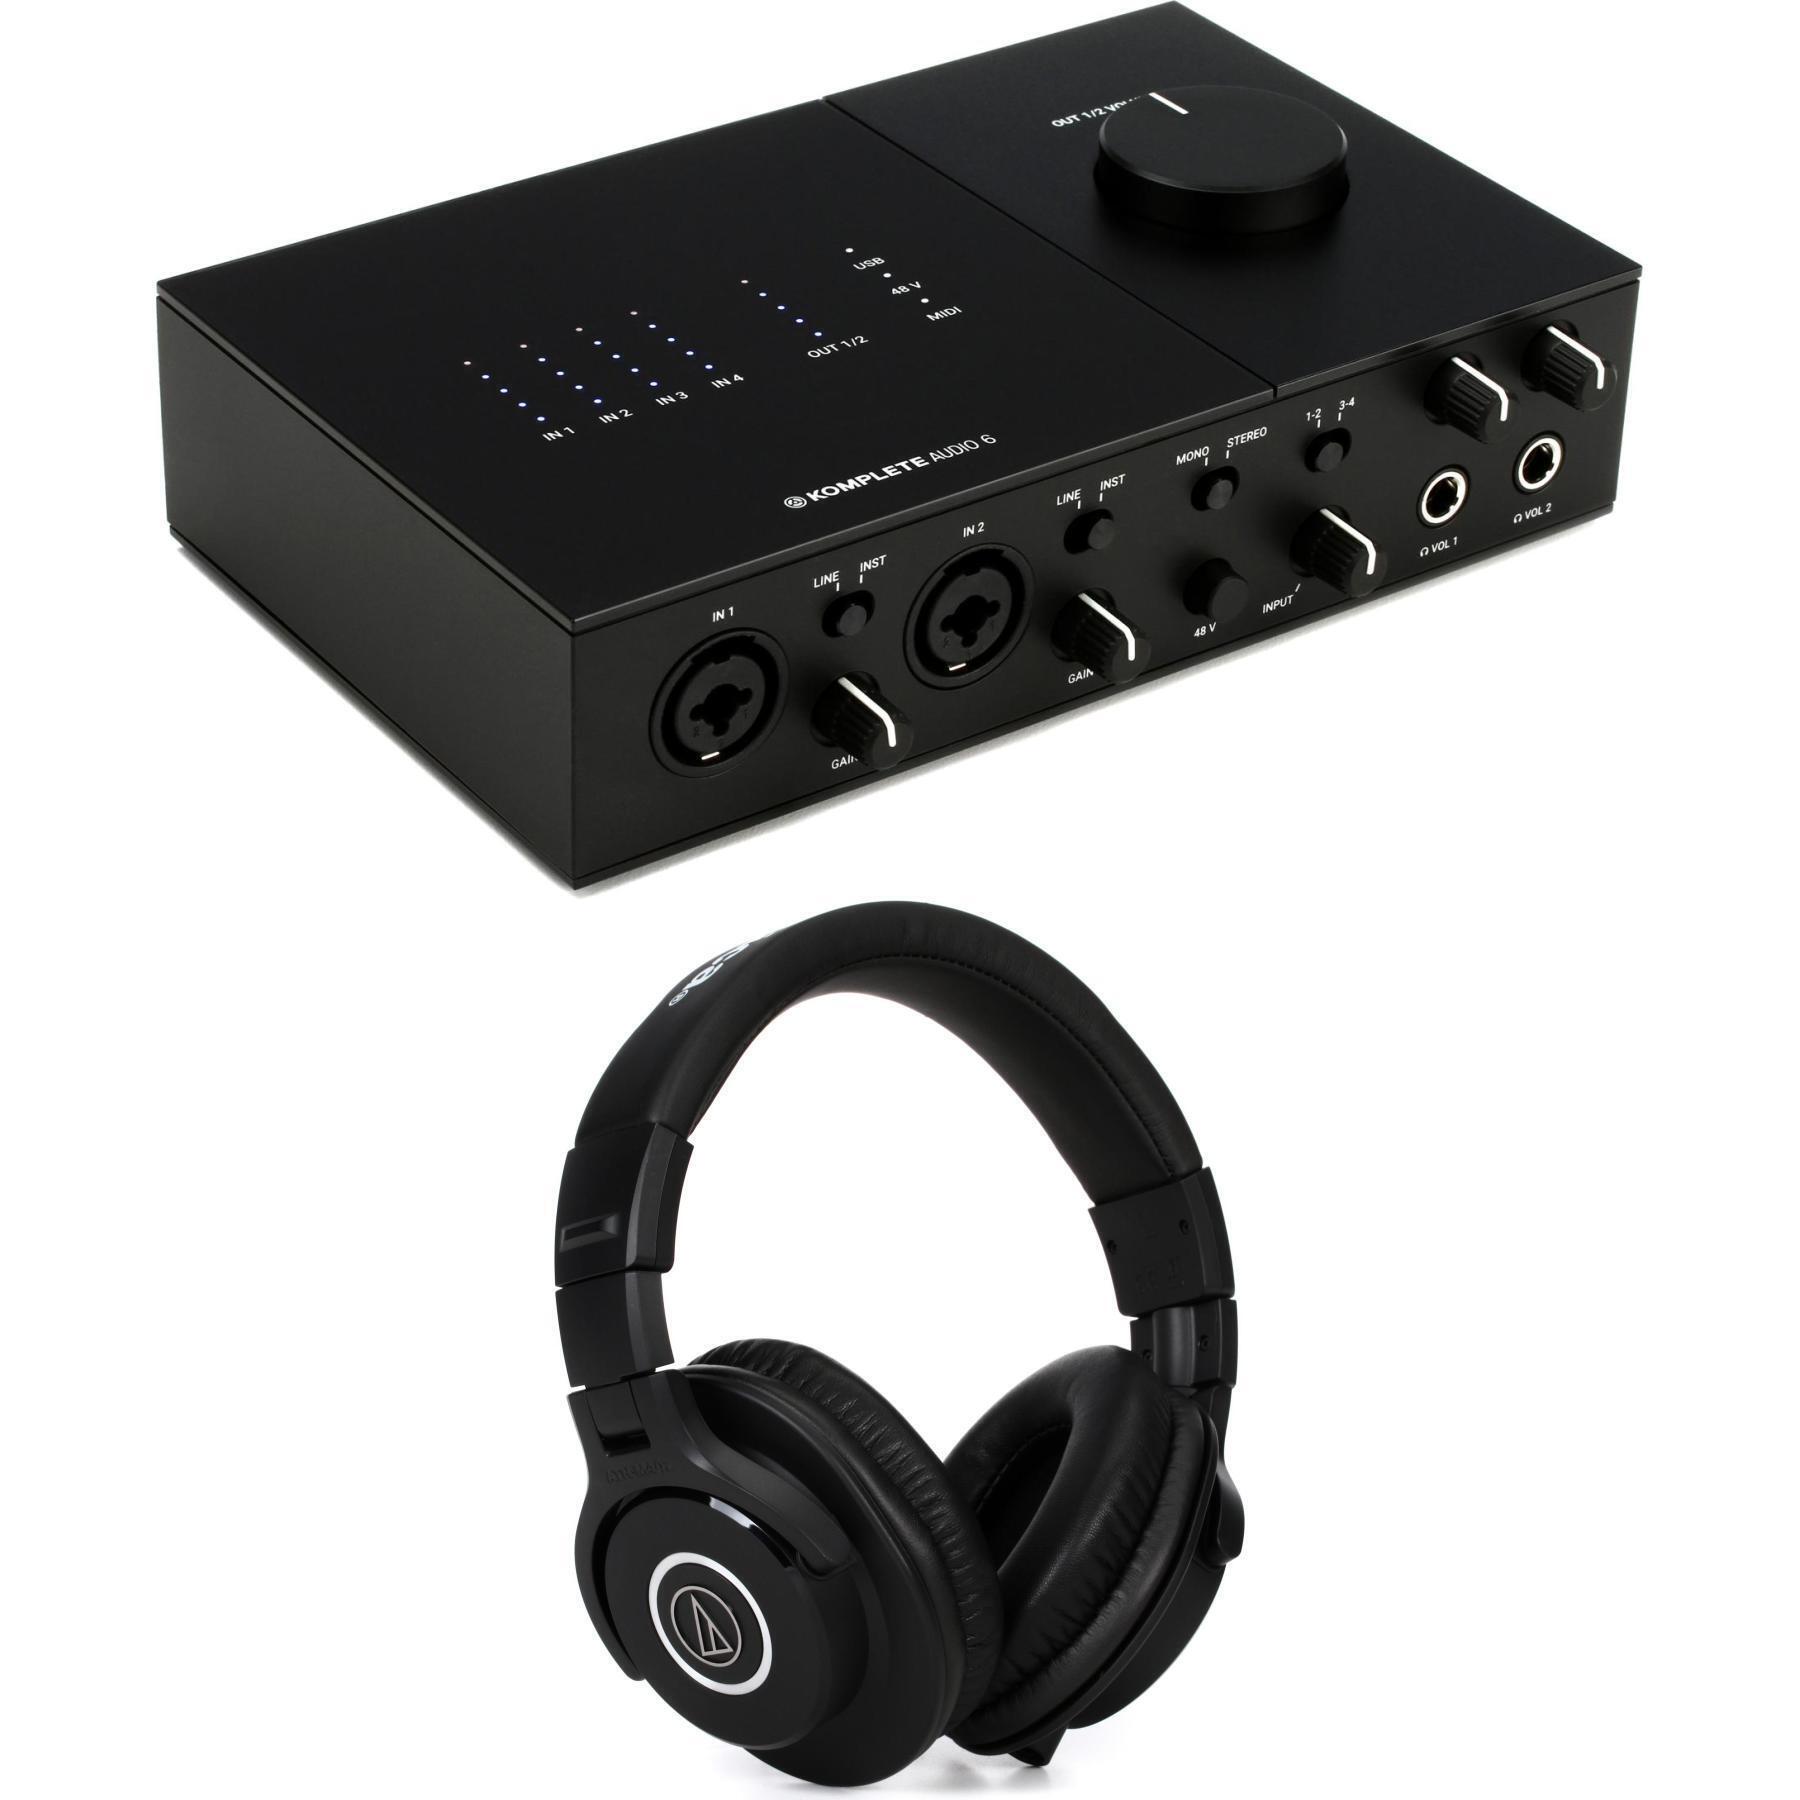 Native Instruments Komplete Audio 6 Mk2 USB Audio Interface and Headphones